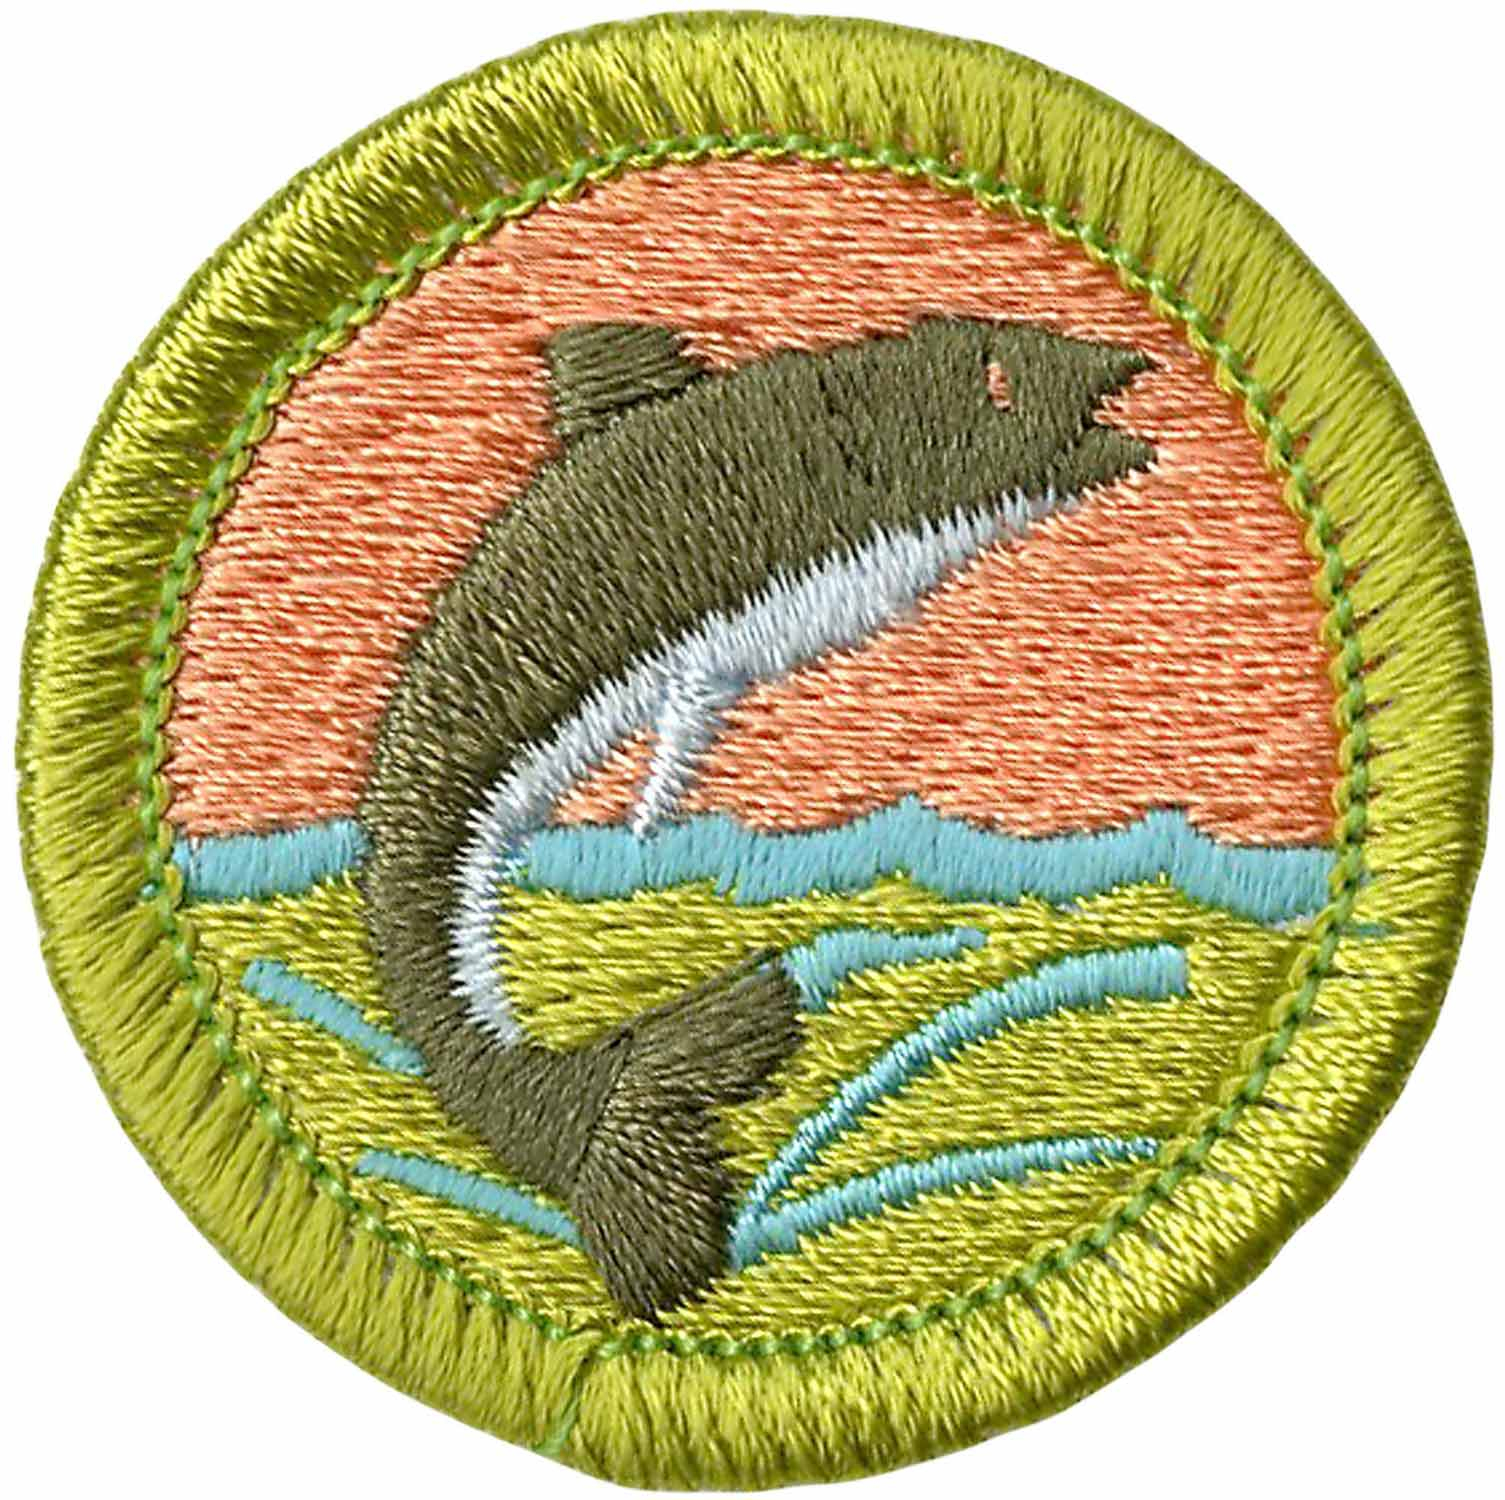 https://retailobjects.scoutshop.org/media/catalog/product/cache/15846fcd7c7438adaa15ad763c45b358/6/5/657502_fishing-merit-badge-emblem.jpg